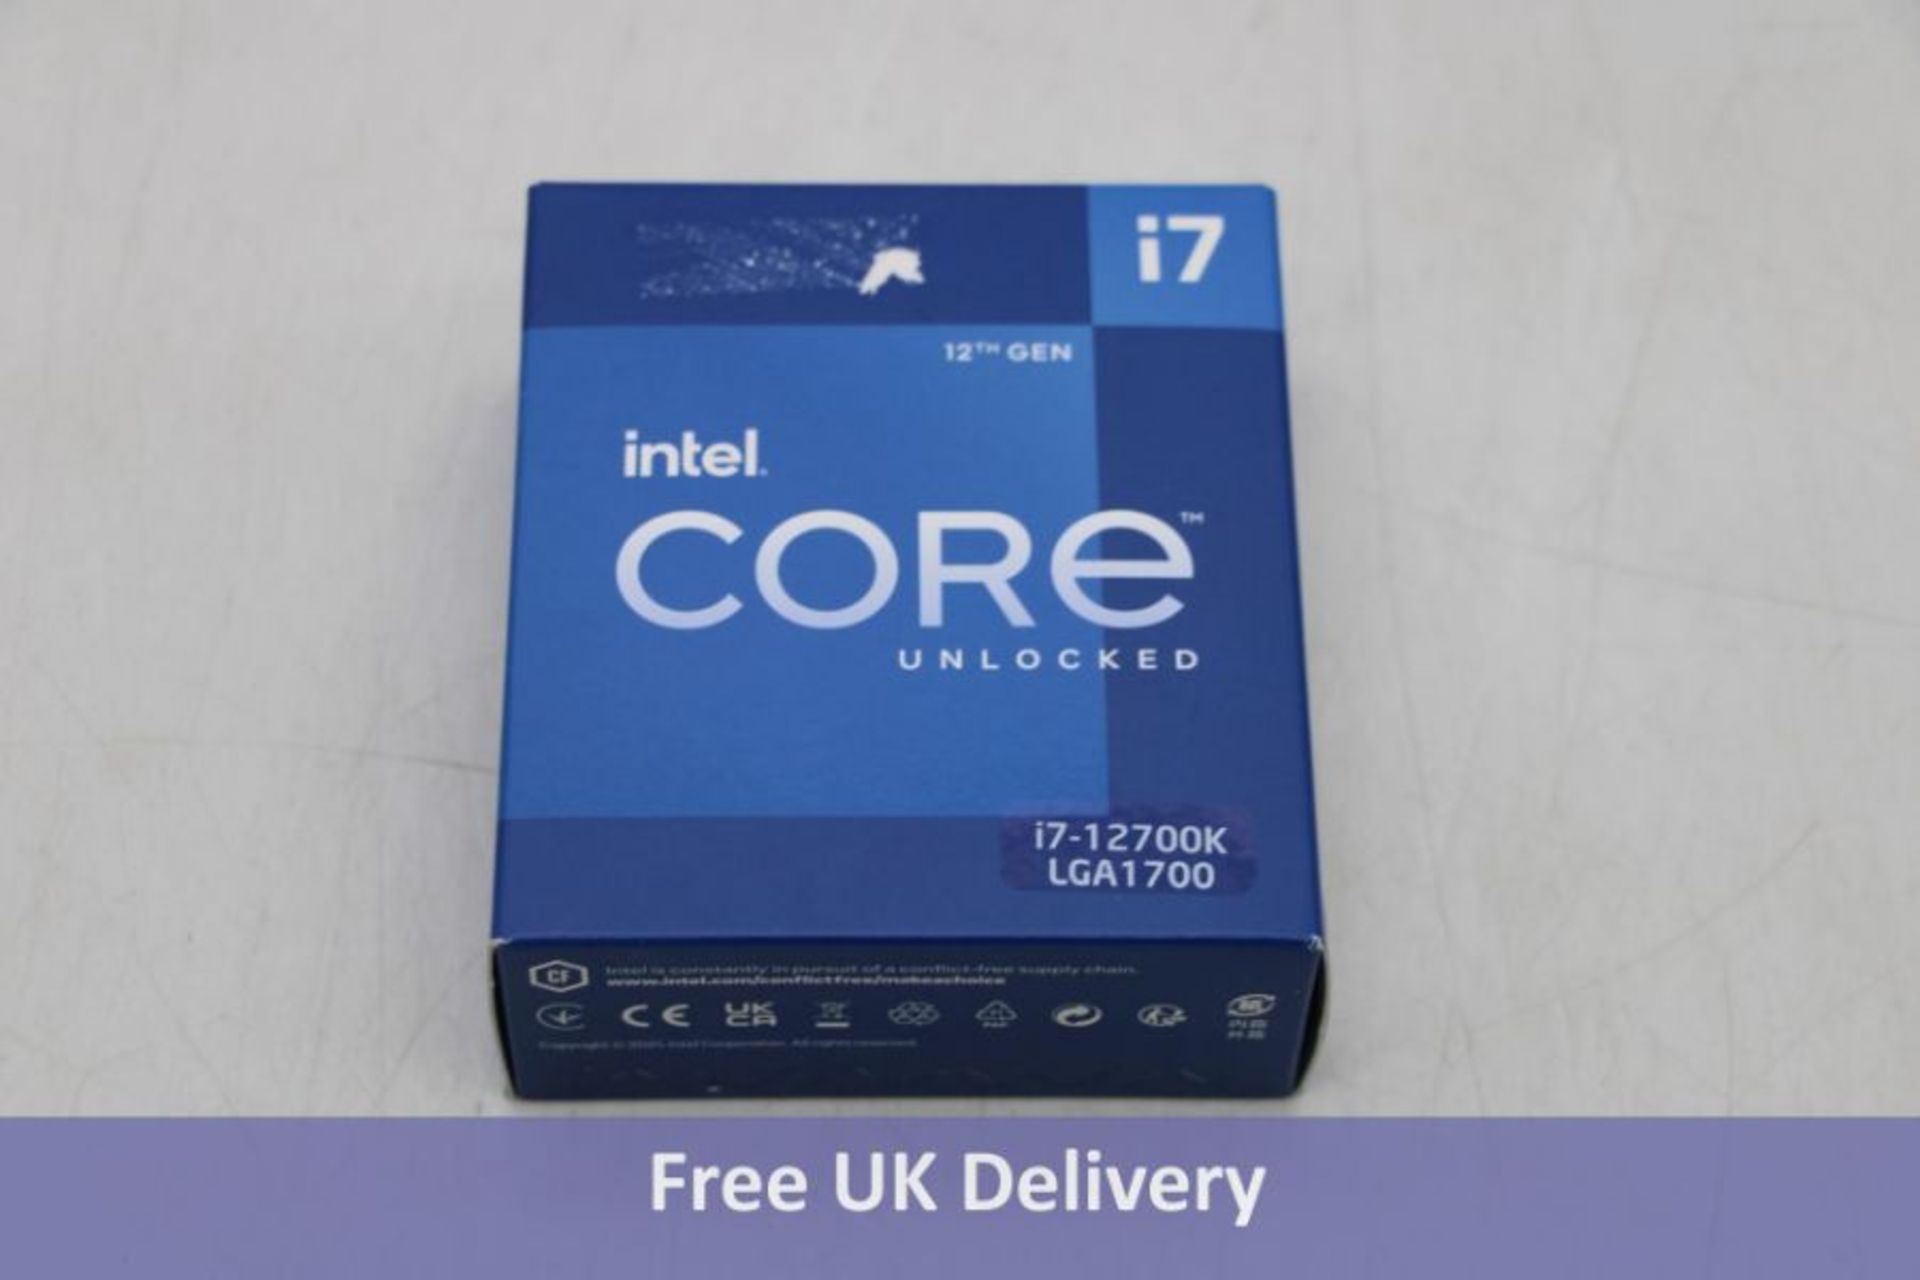 Intel Core i7-12700K 12th Gen Desktop Processor. Boxed, box damaged